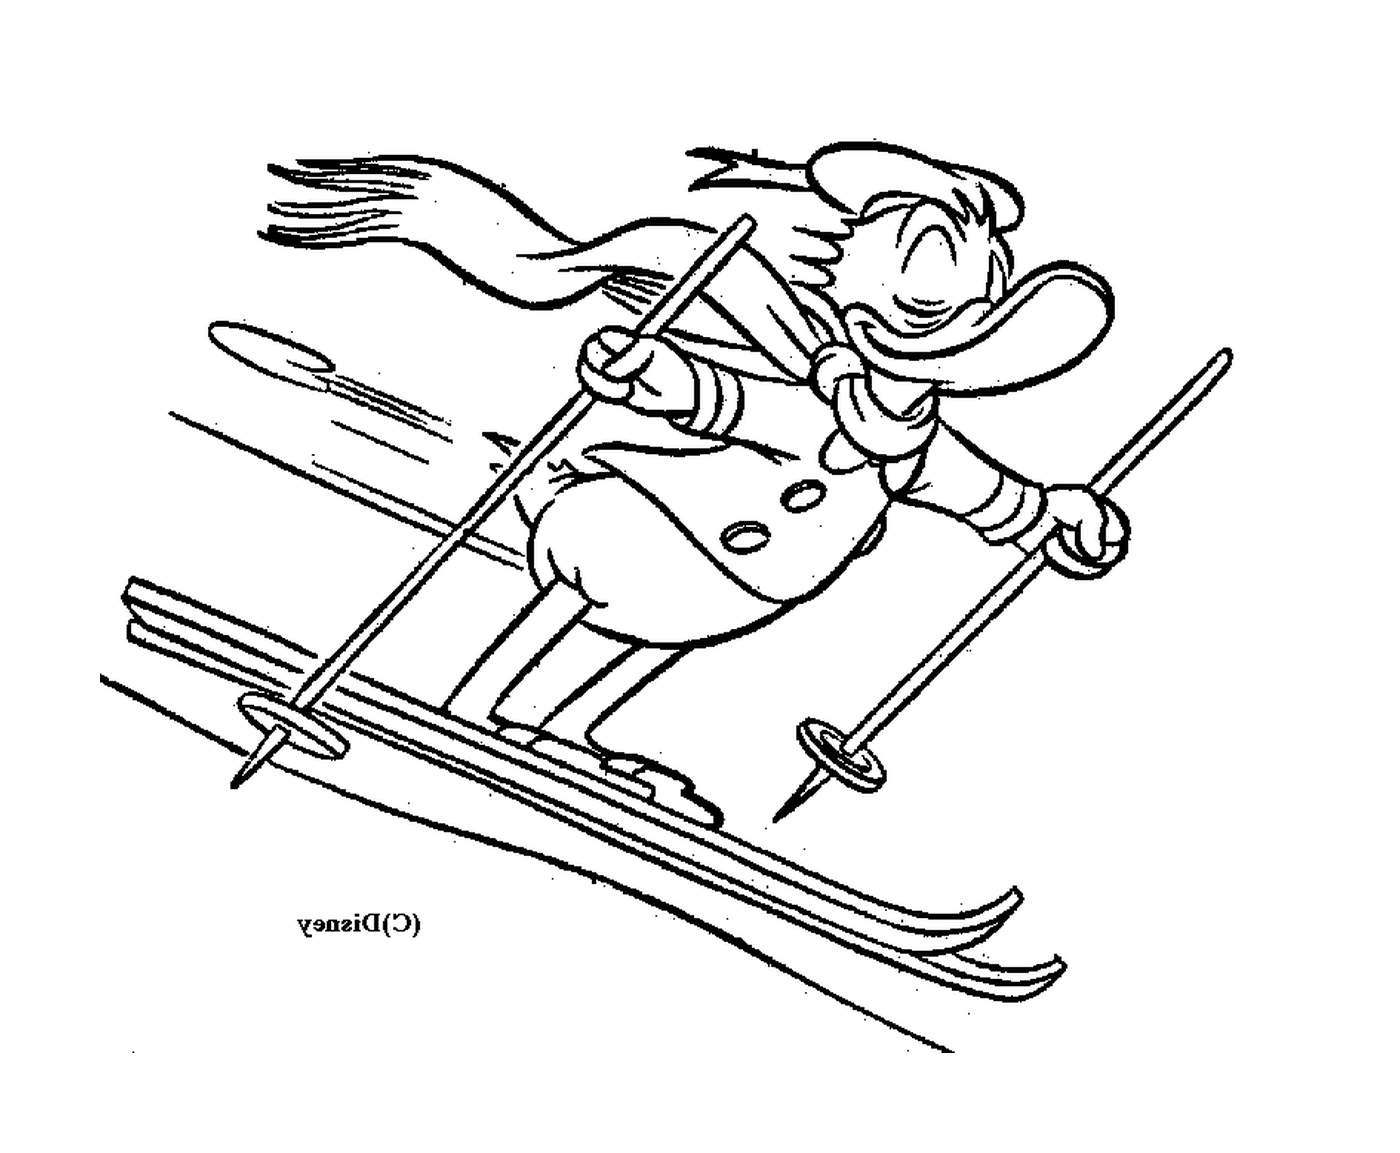  Donald轻松地卸下滑雪斜坡 